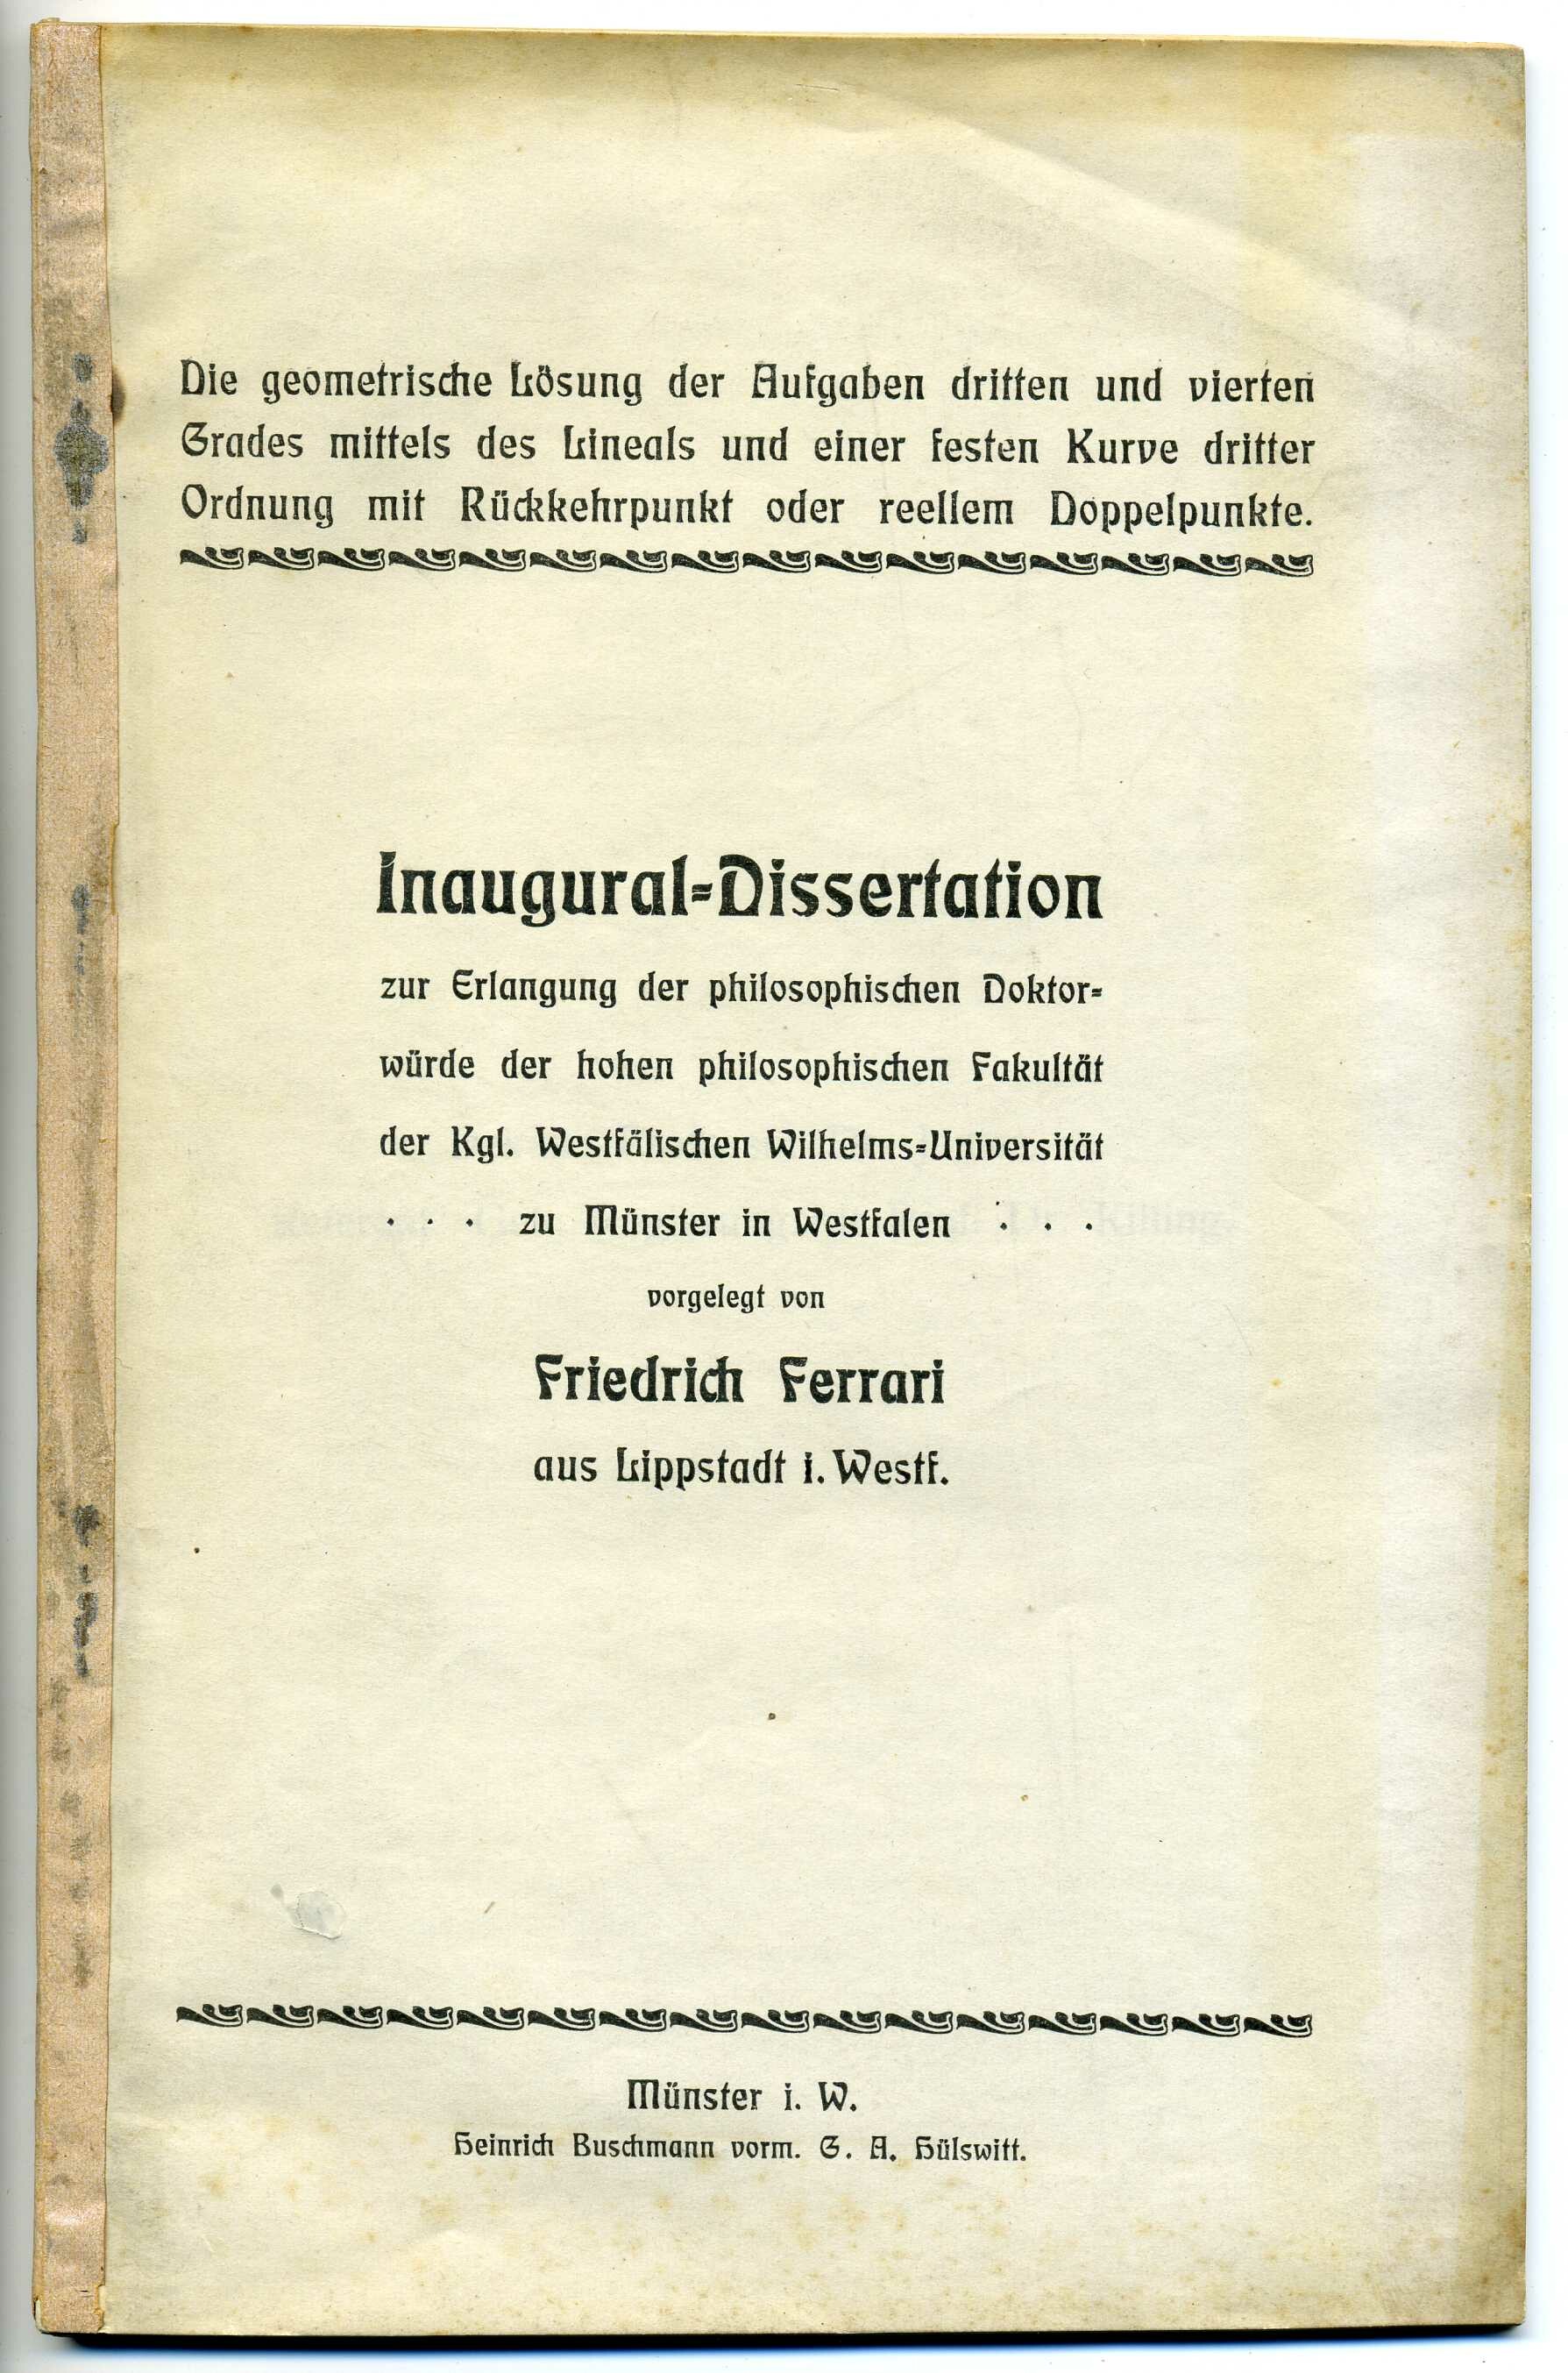 Dissertation Friedrich Ferrari (Stadtmuseum Lippstadt RR-F)